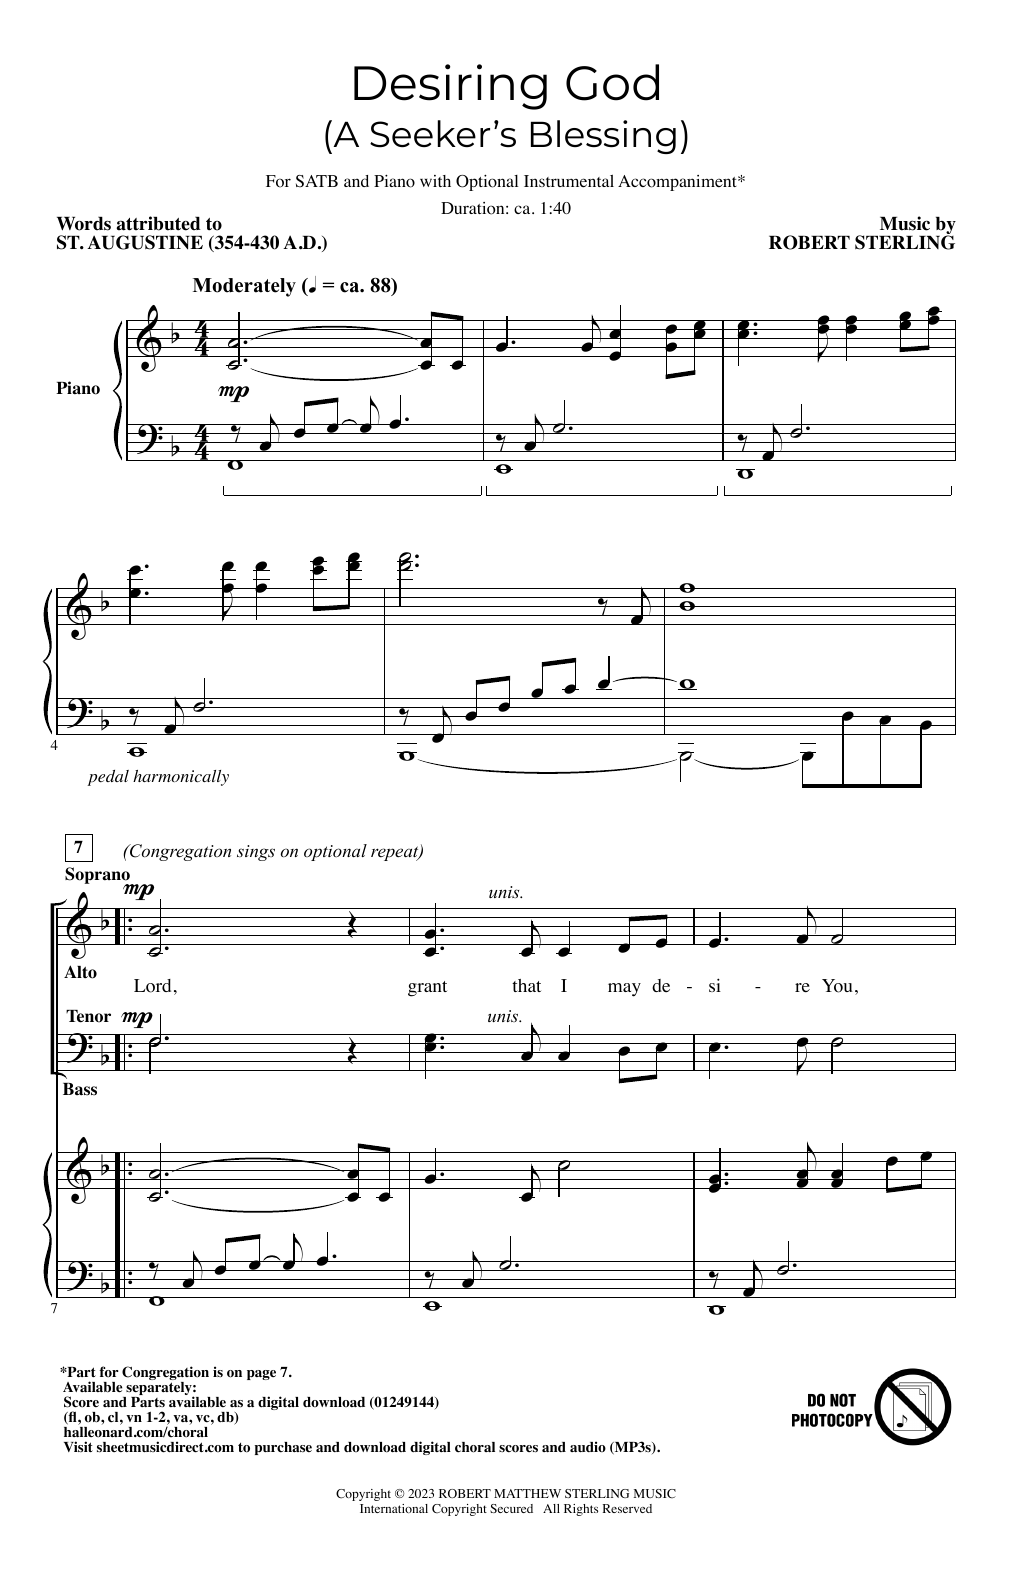 Robert Sterling Desiring God (A Seeker's Blessing) sheet music notes and chords arranged for SATB Choir